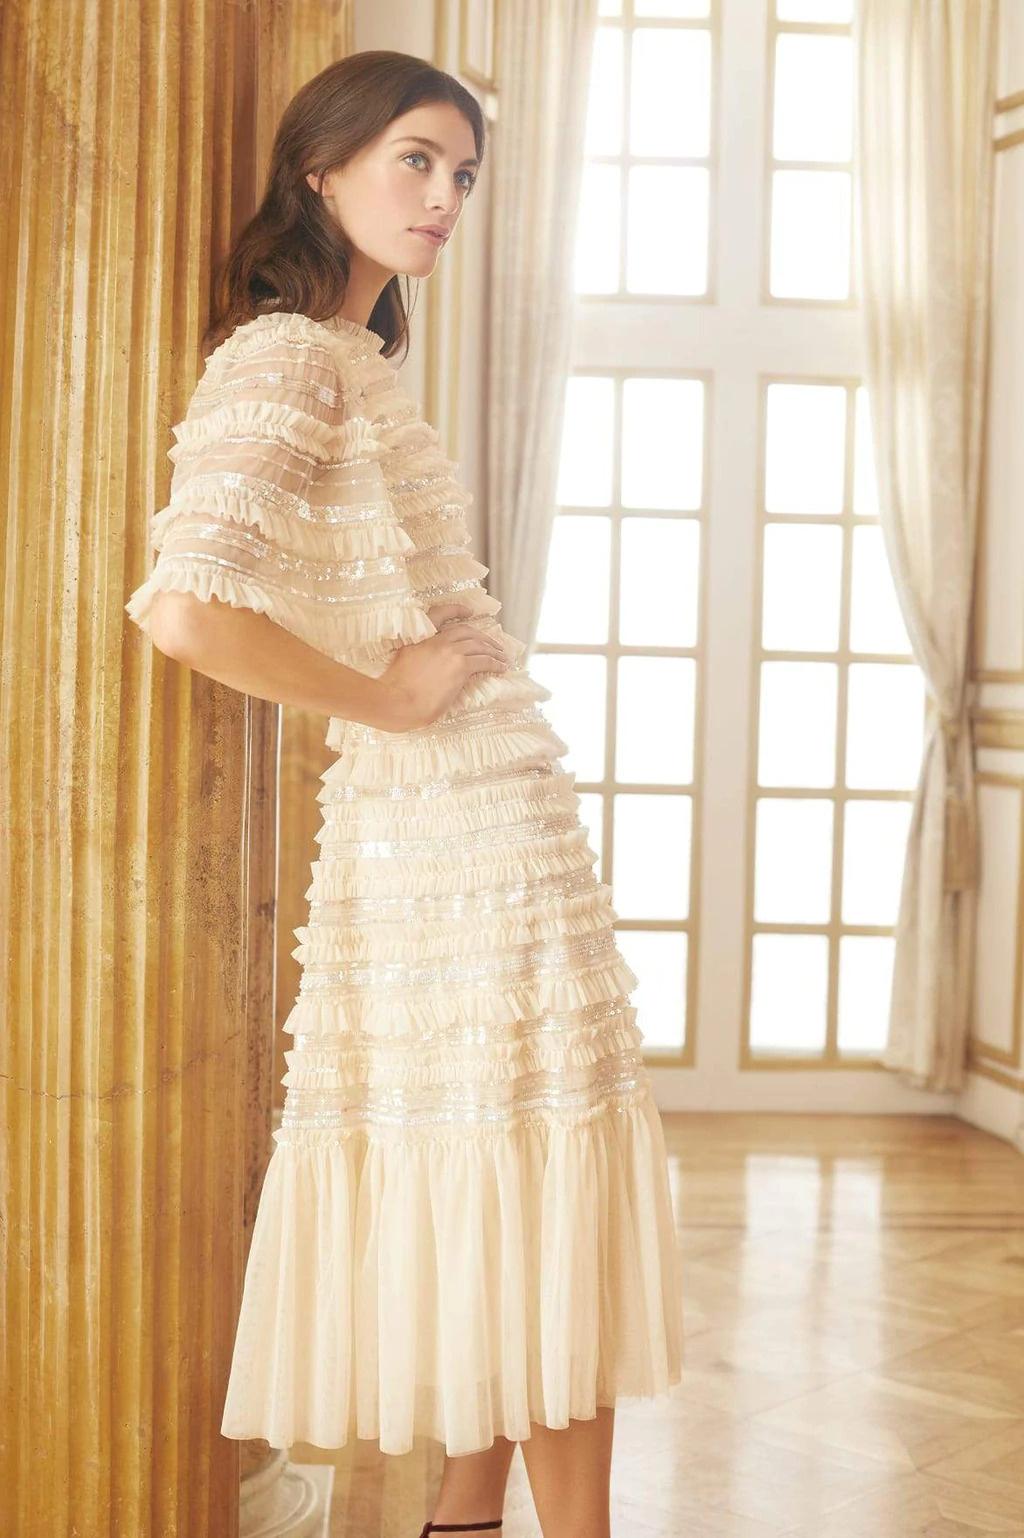 Model wearing a ruffle tea length wedding dress